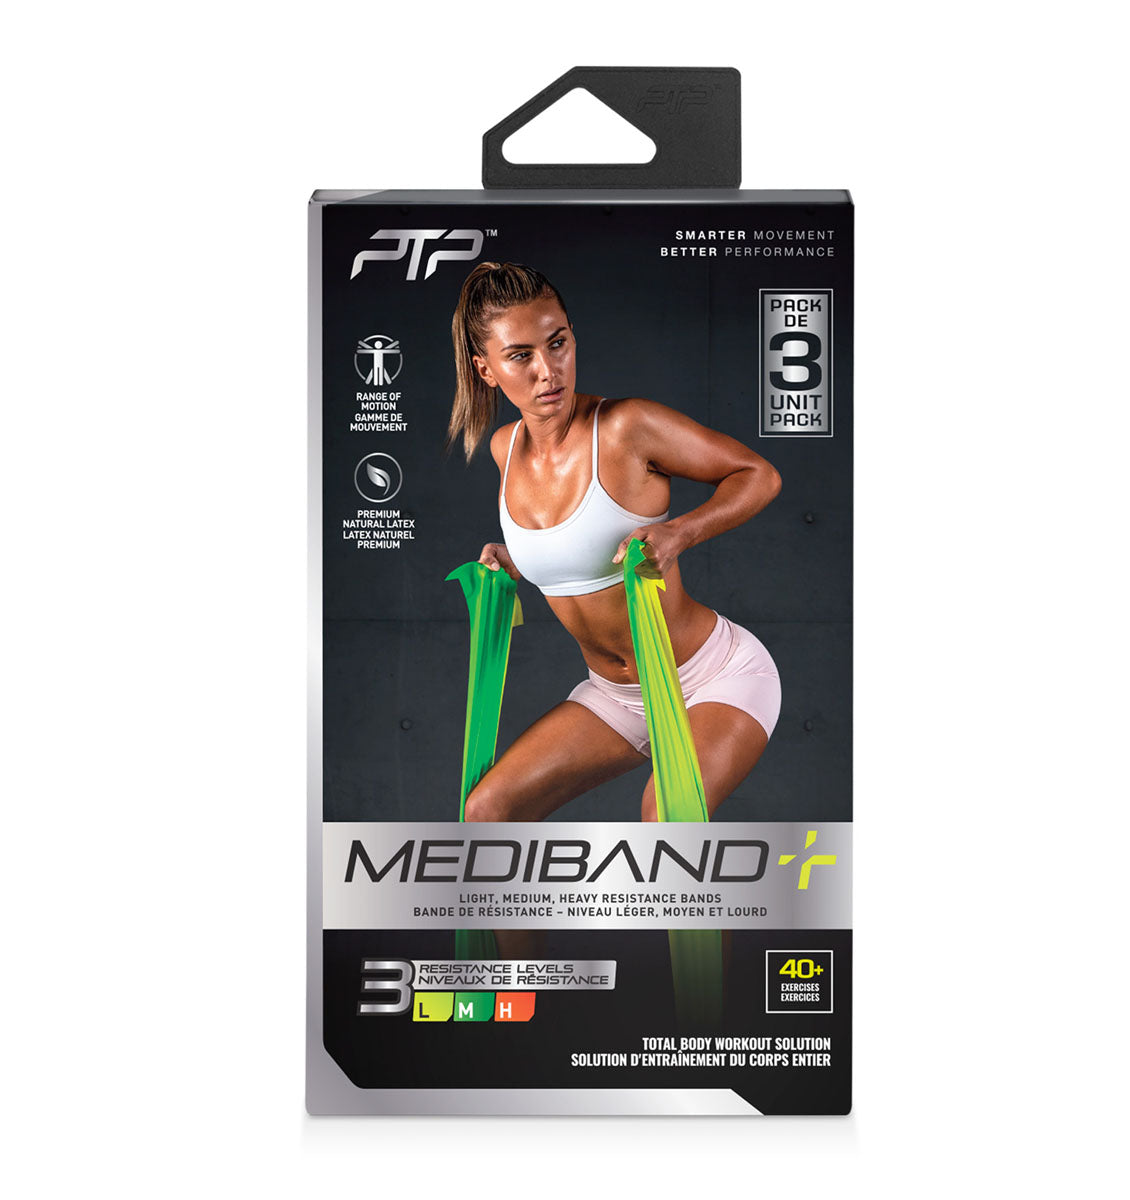 PTP MediBand+ Pack - 2